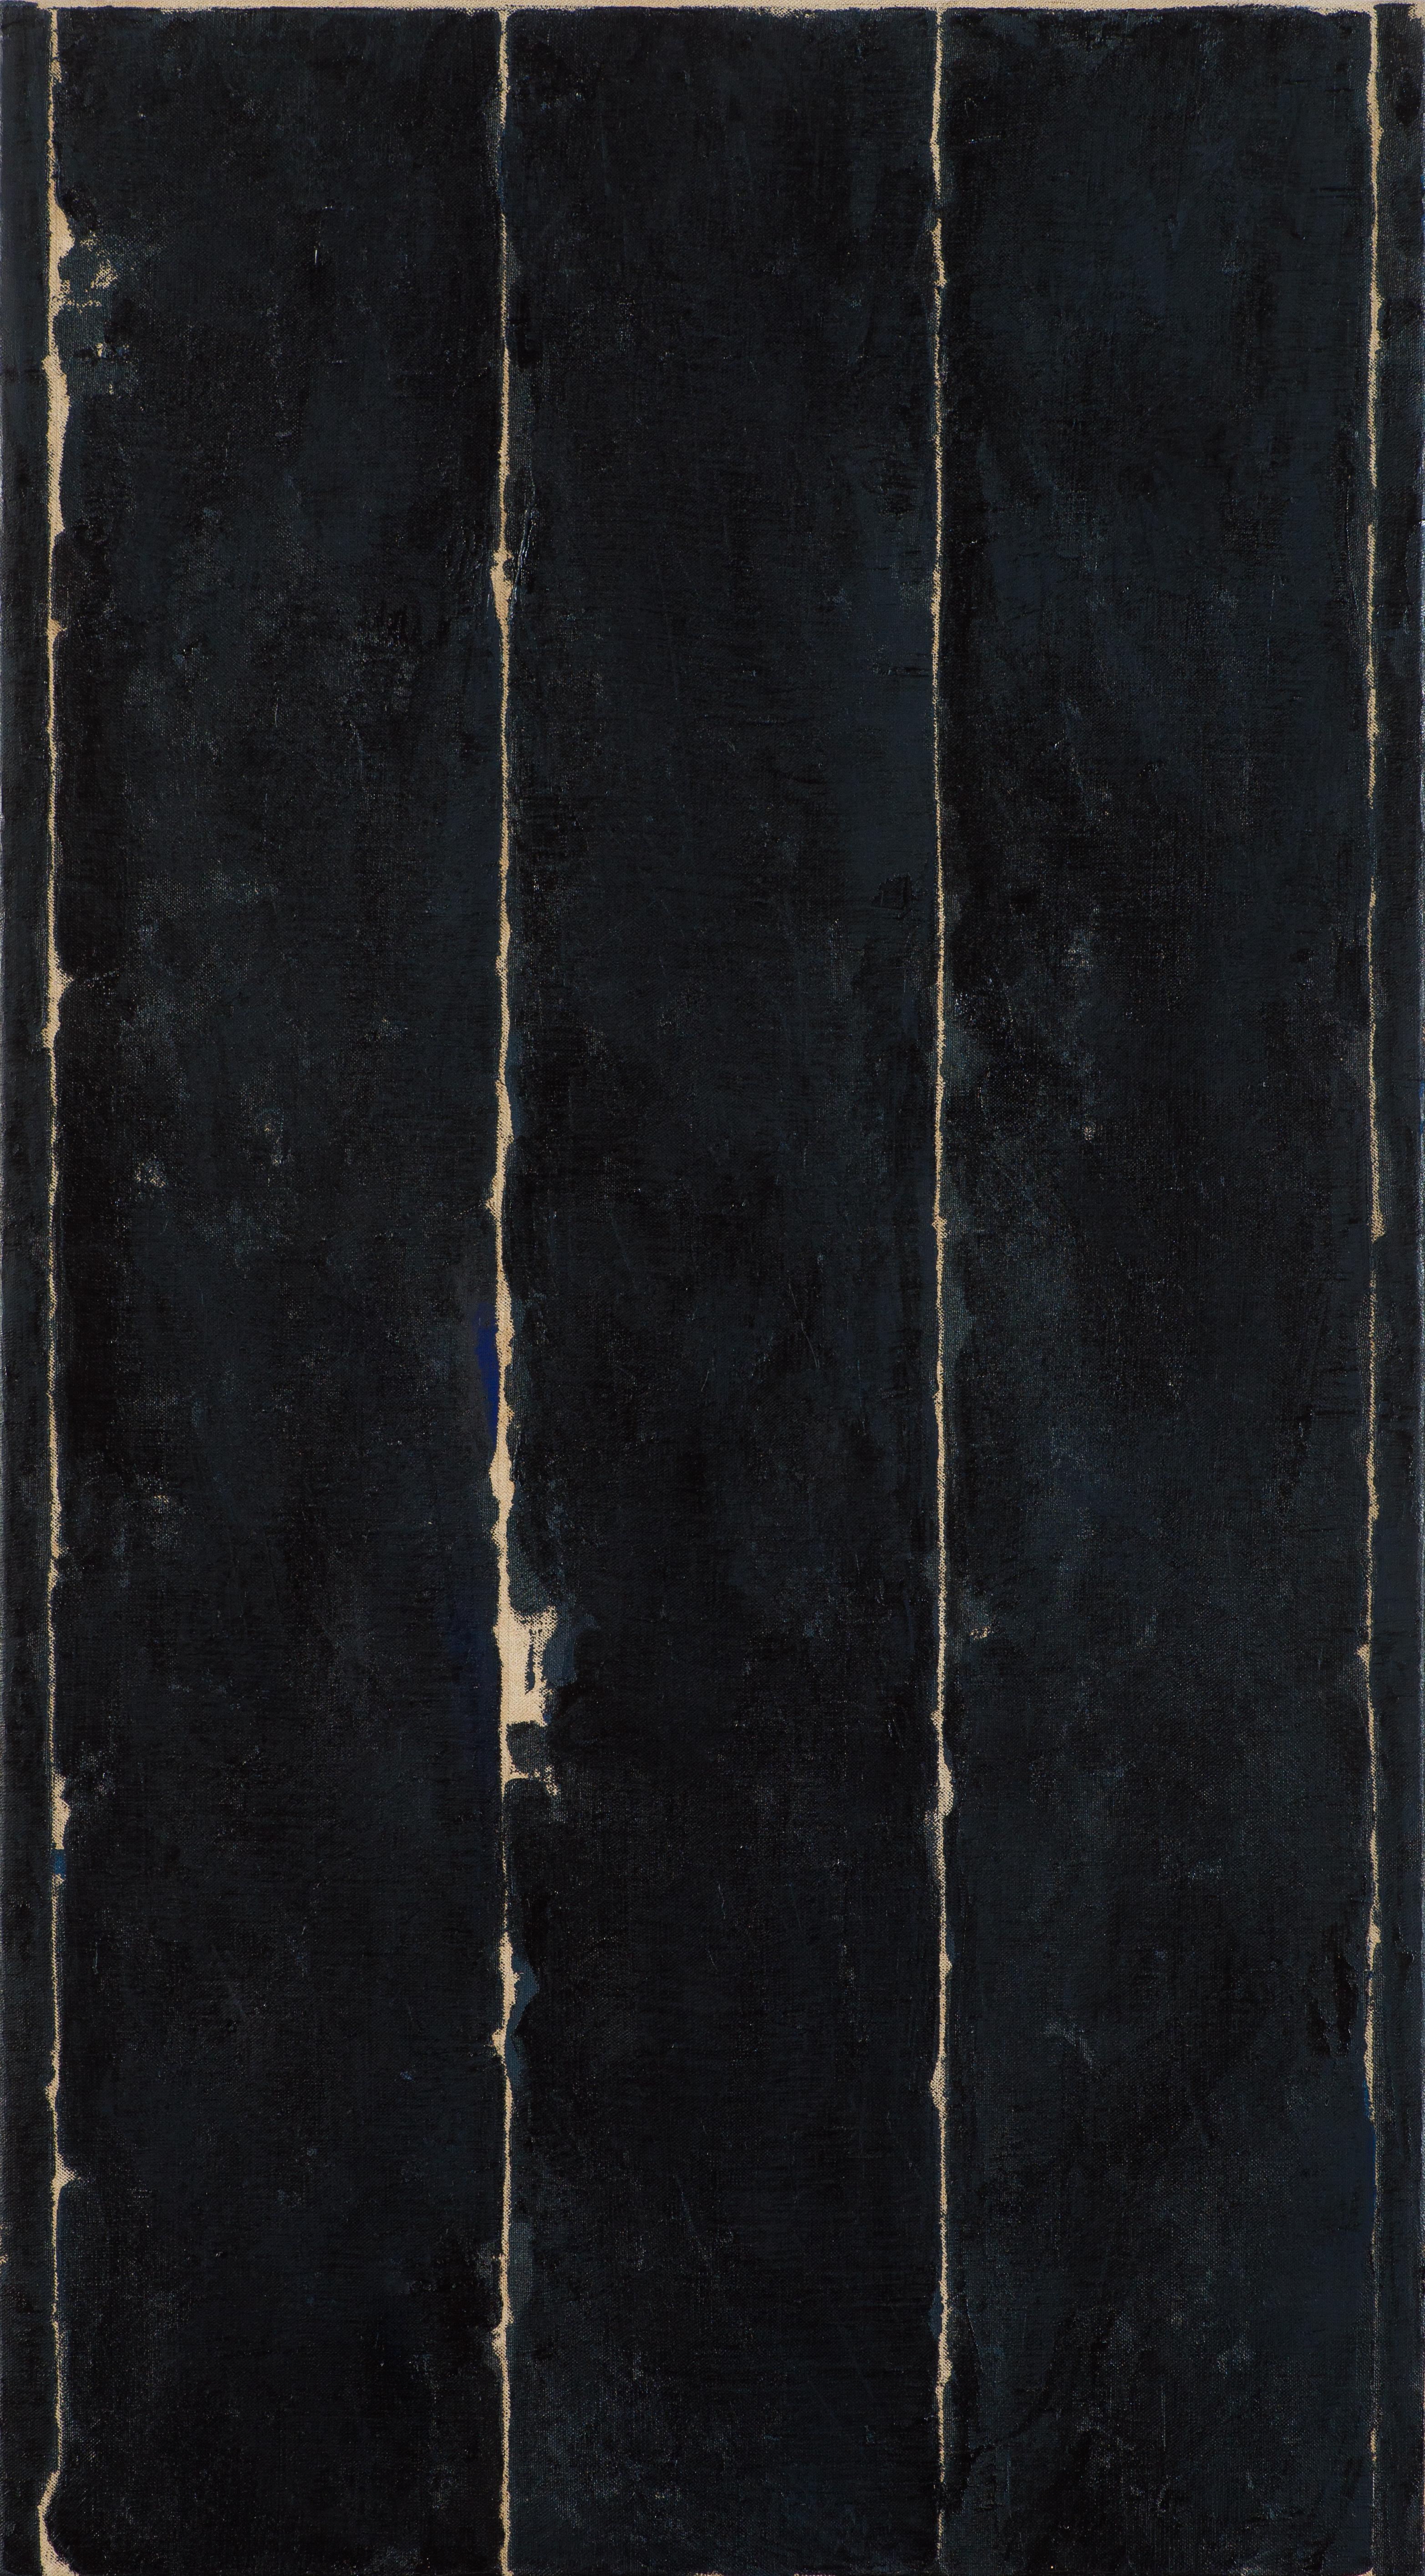 Mala Breuer Abstract Painting - 1978 (black)